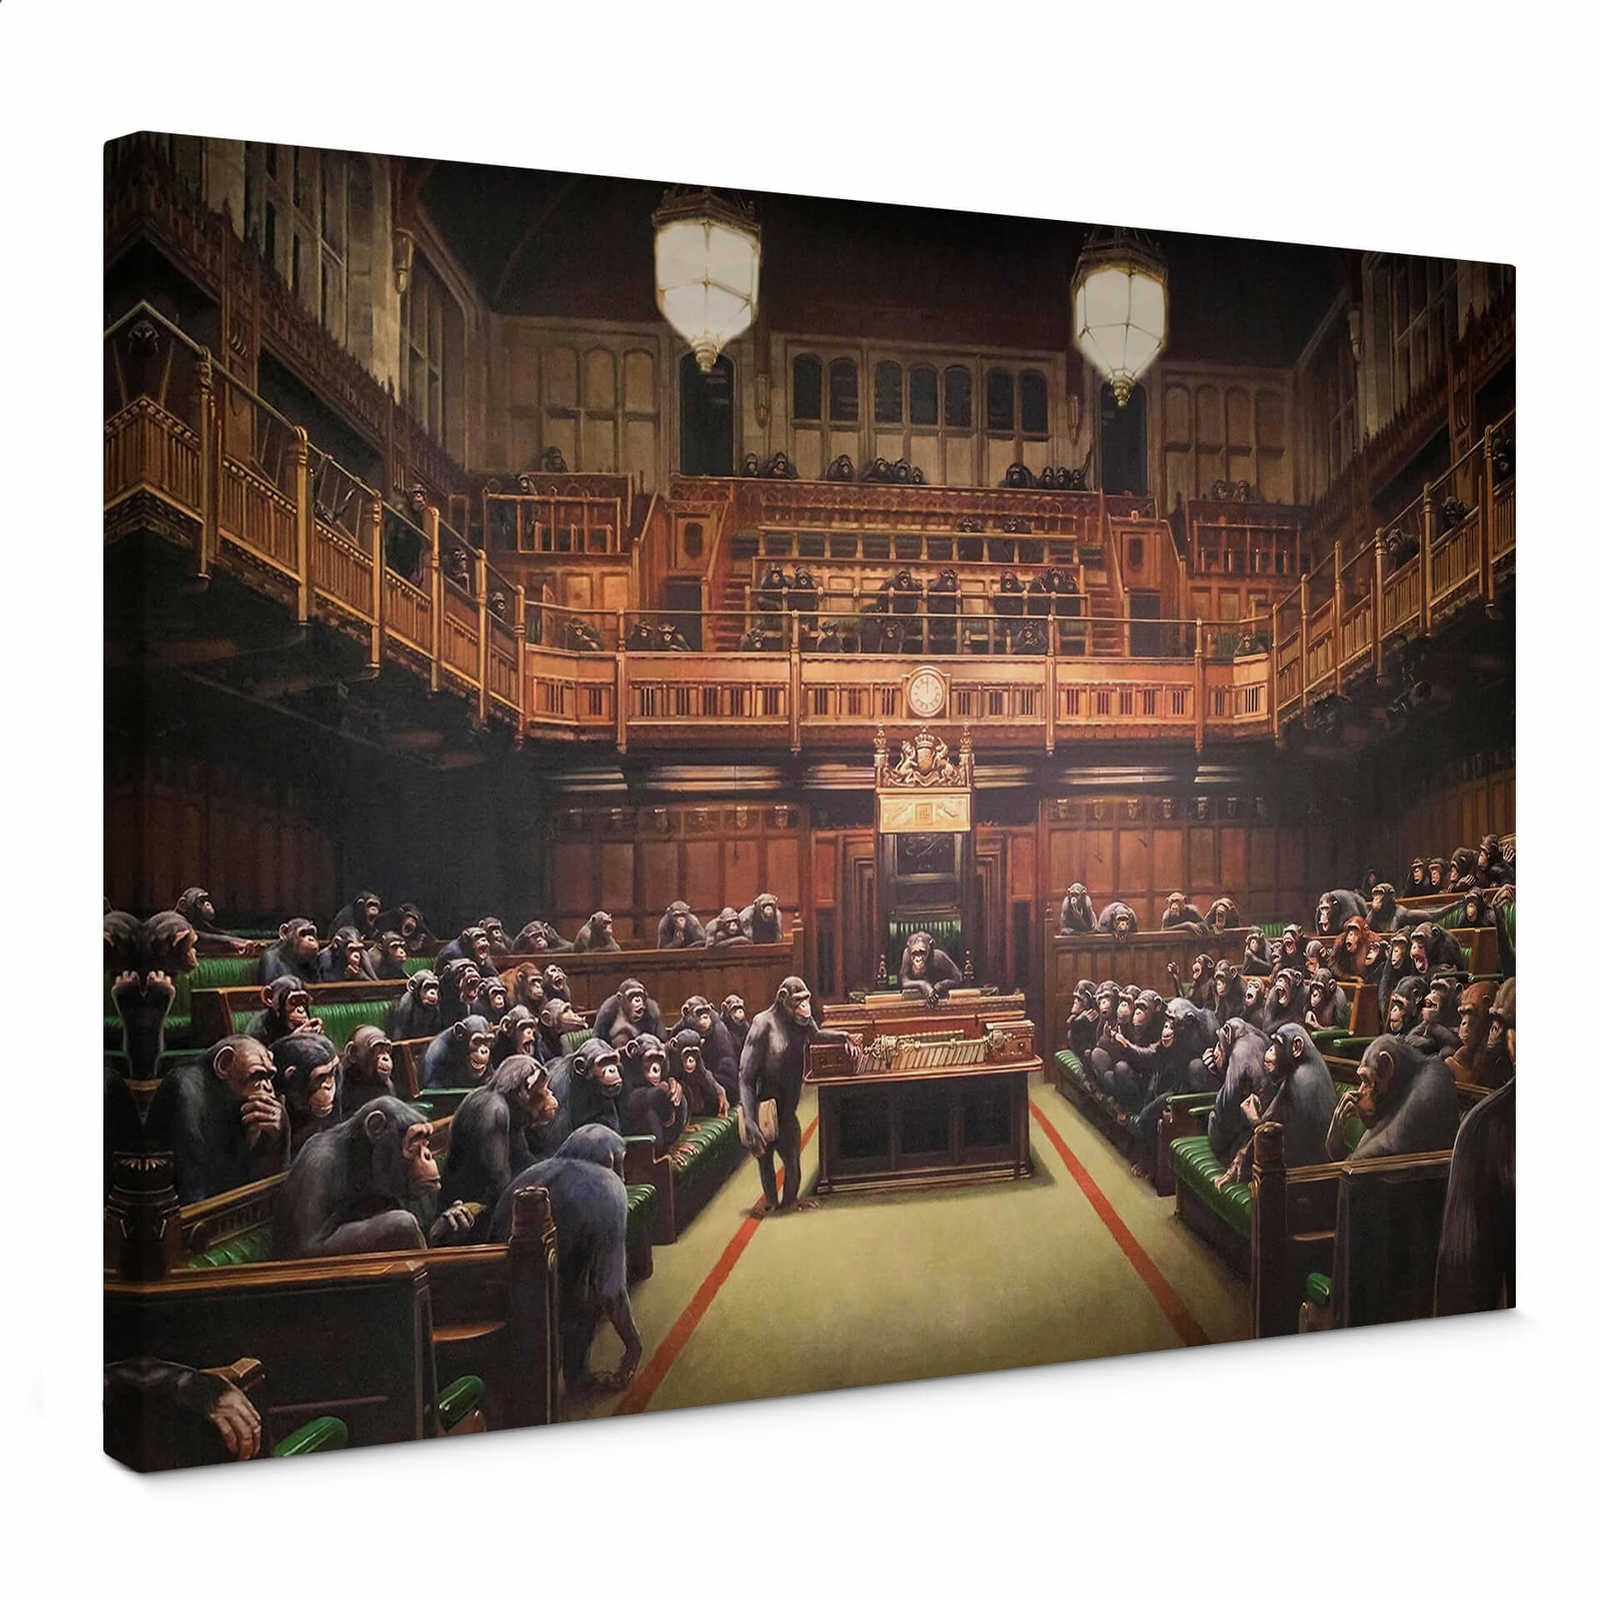         Leinwandbild Banksy "Devolved Parliament" – 0,70 m x 0,50 m
    